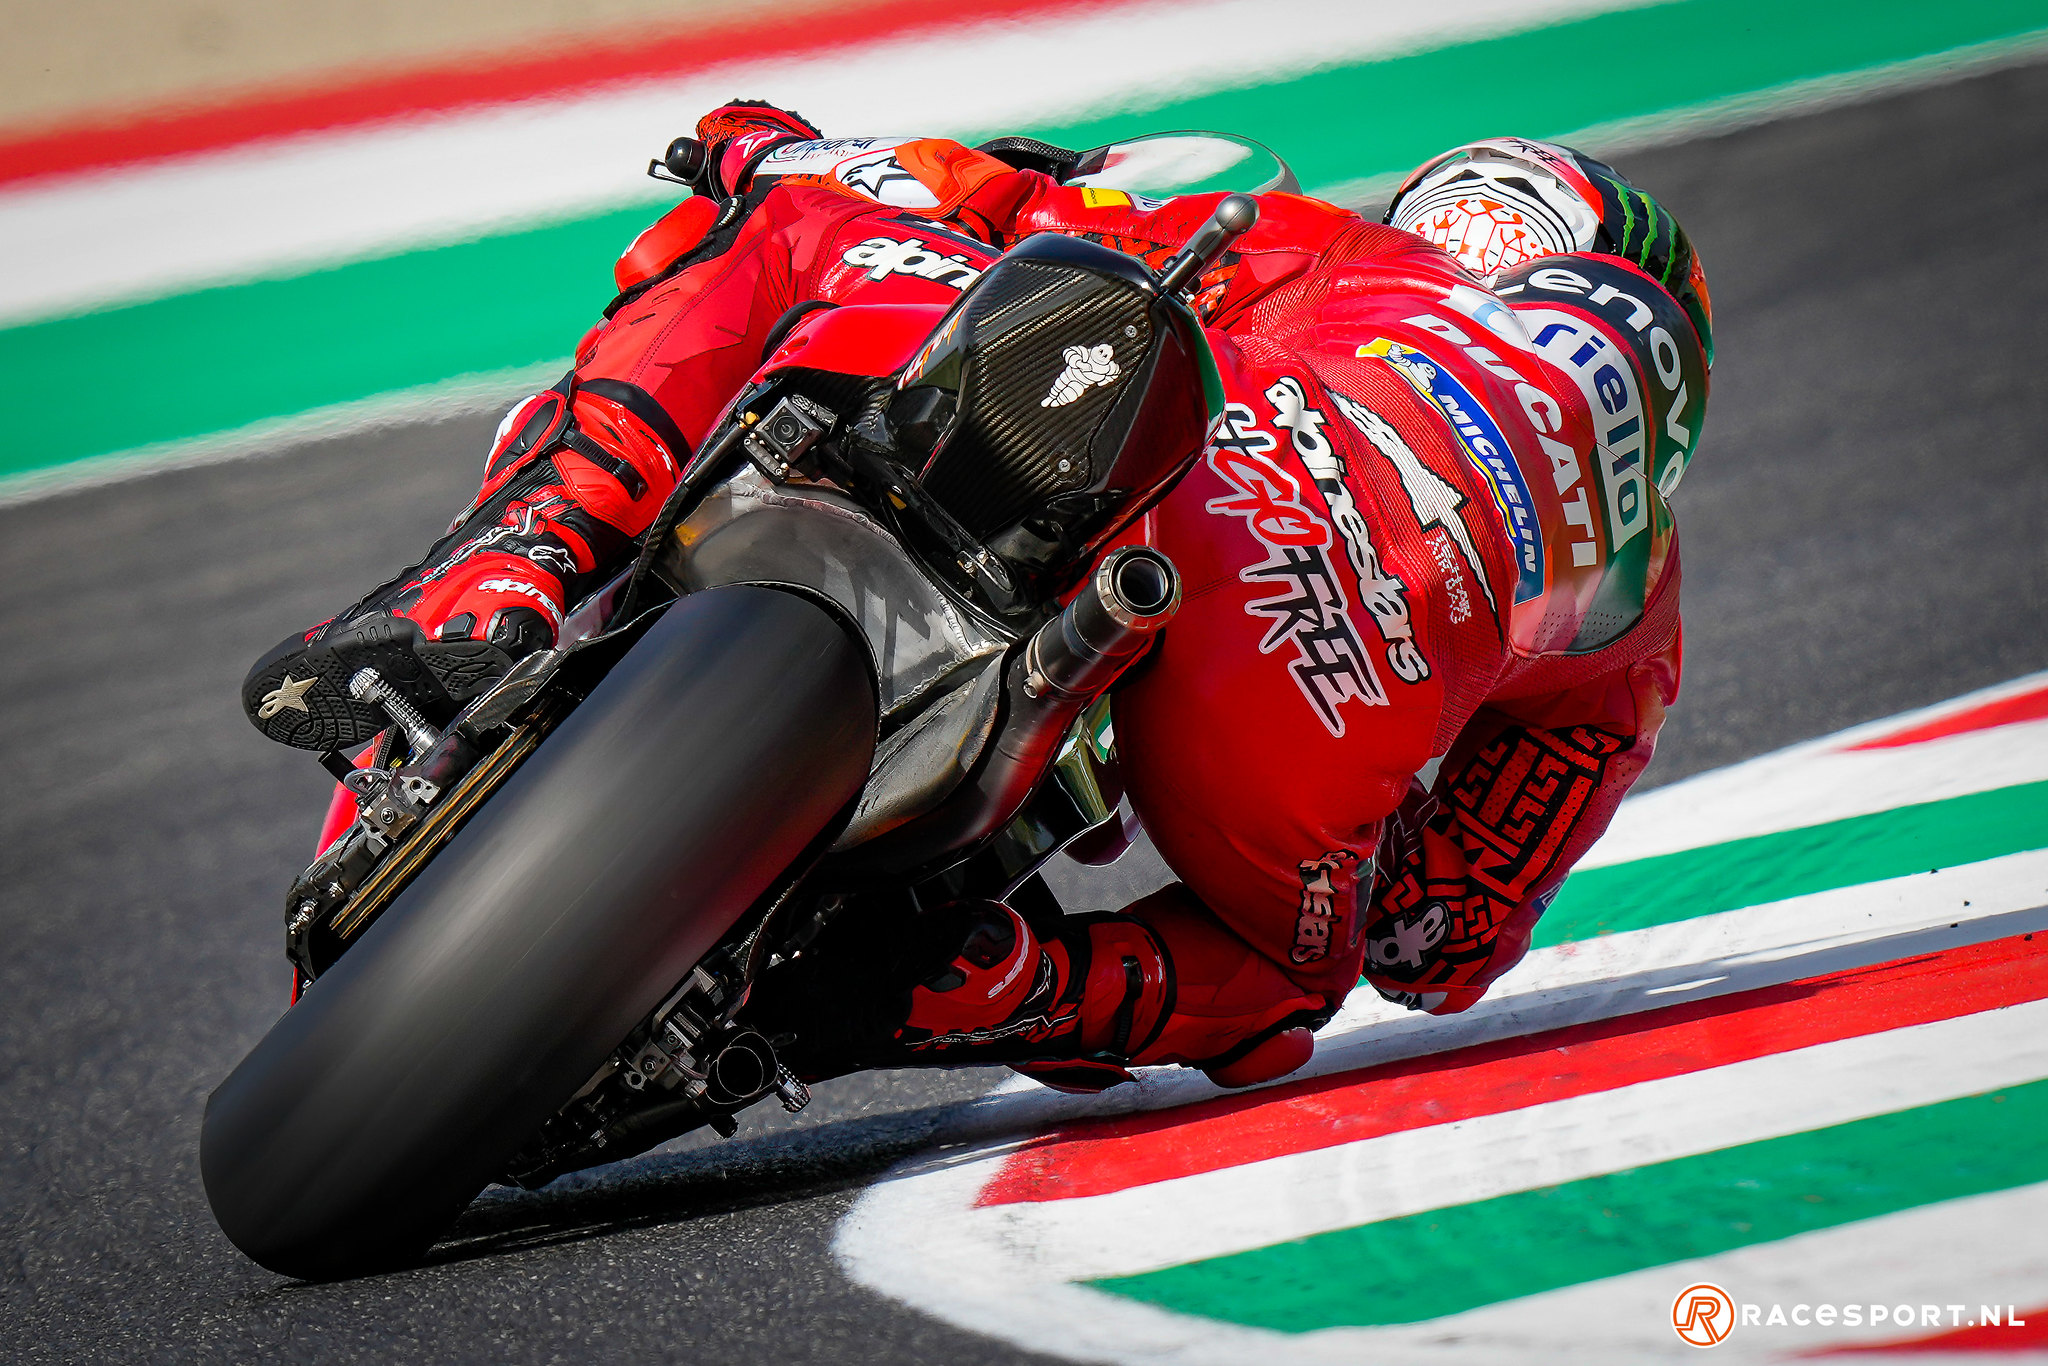 #63 Francesco Bagnaia - (ITA) - Ducati Lenovo Team - Ducati Desmosedici GP22